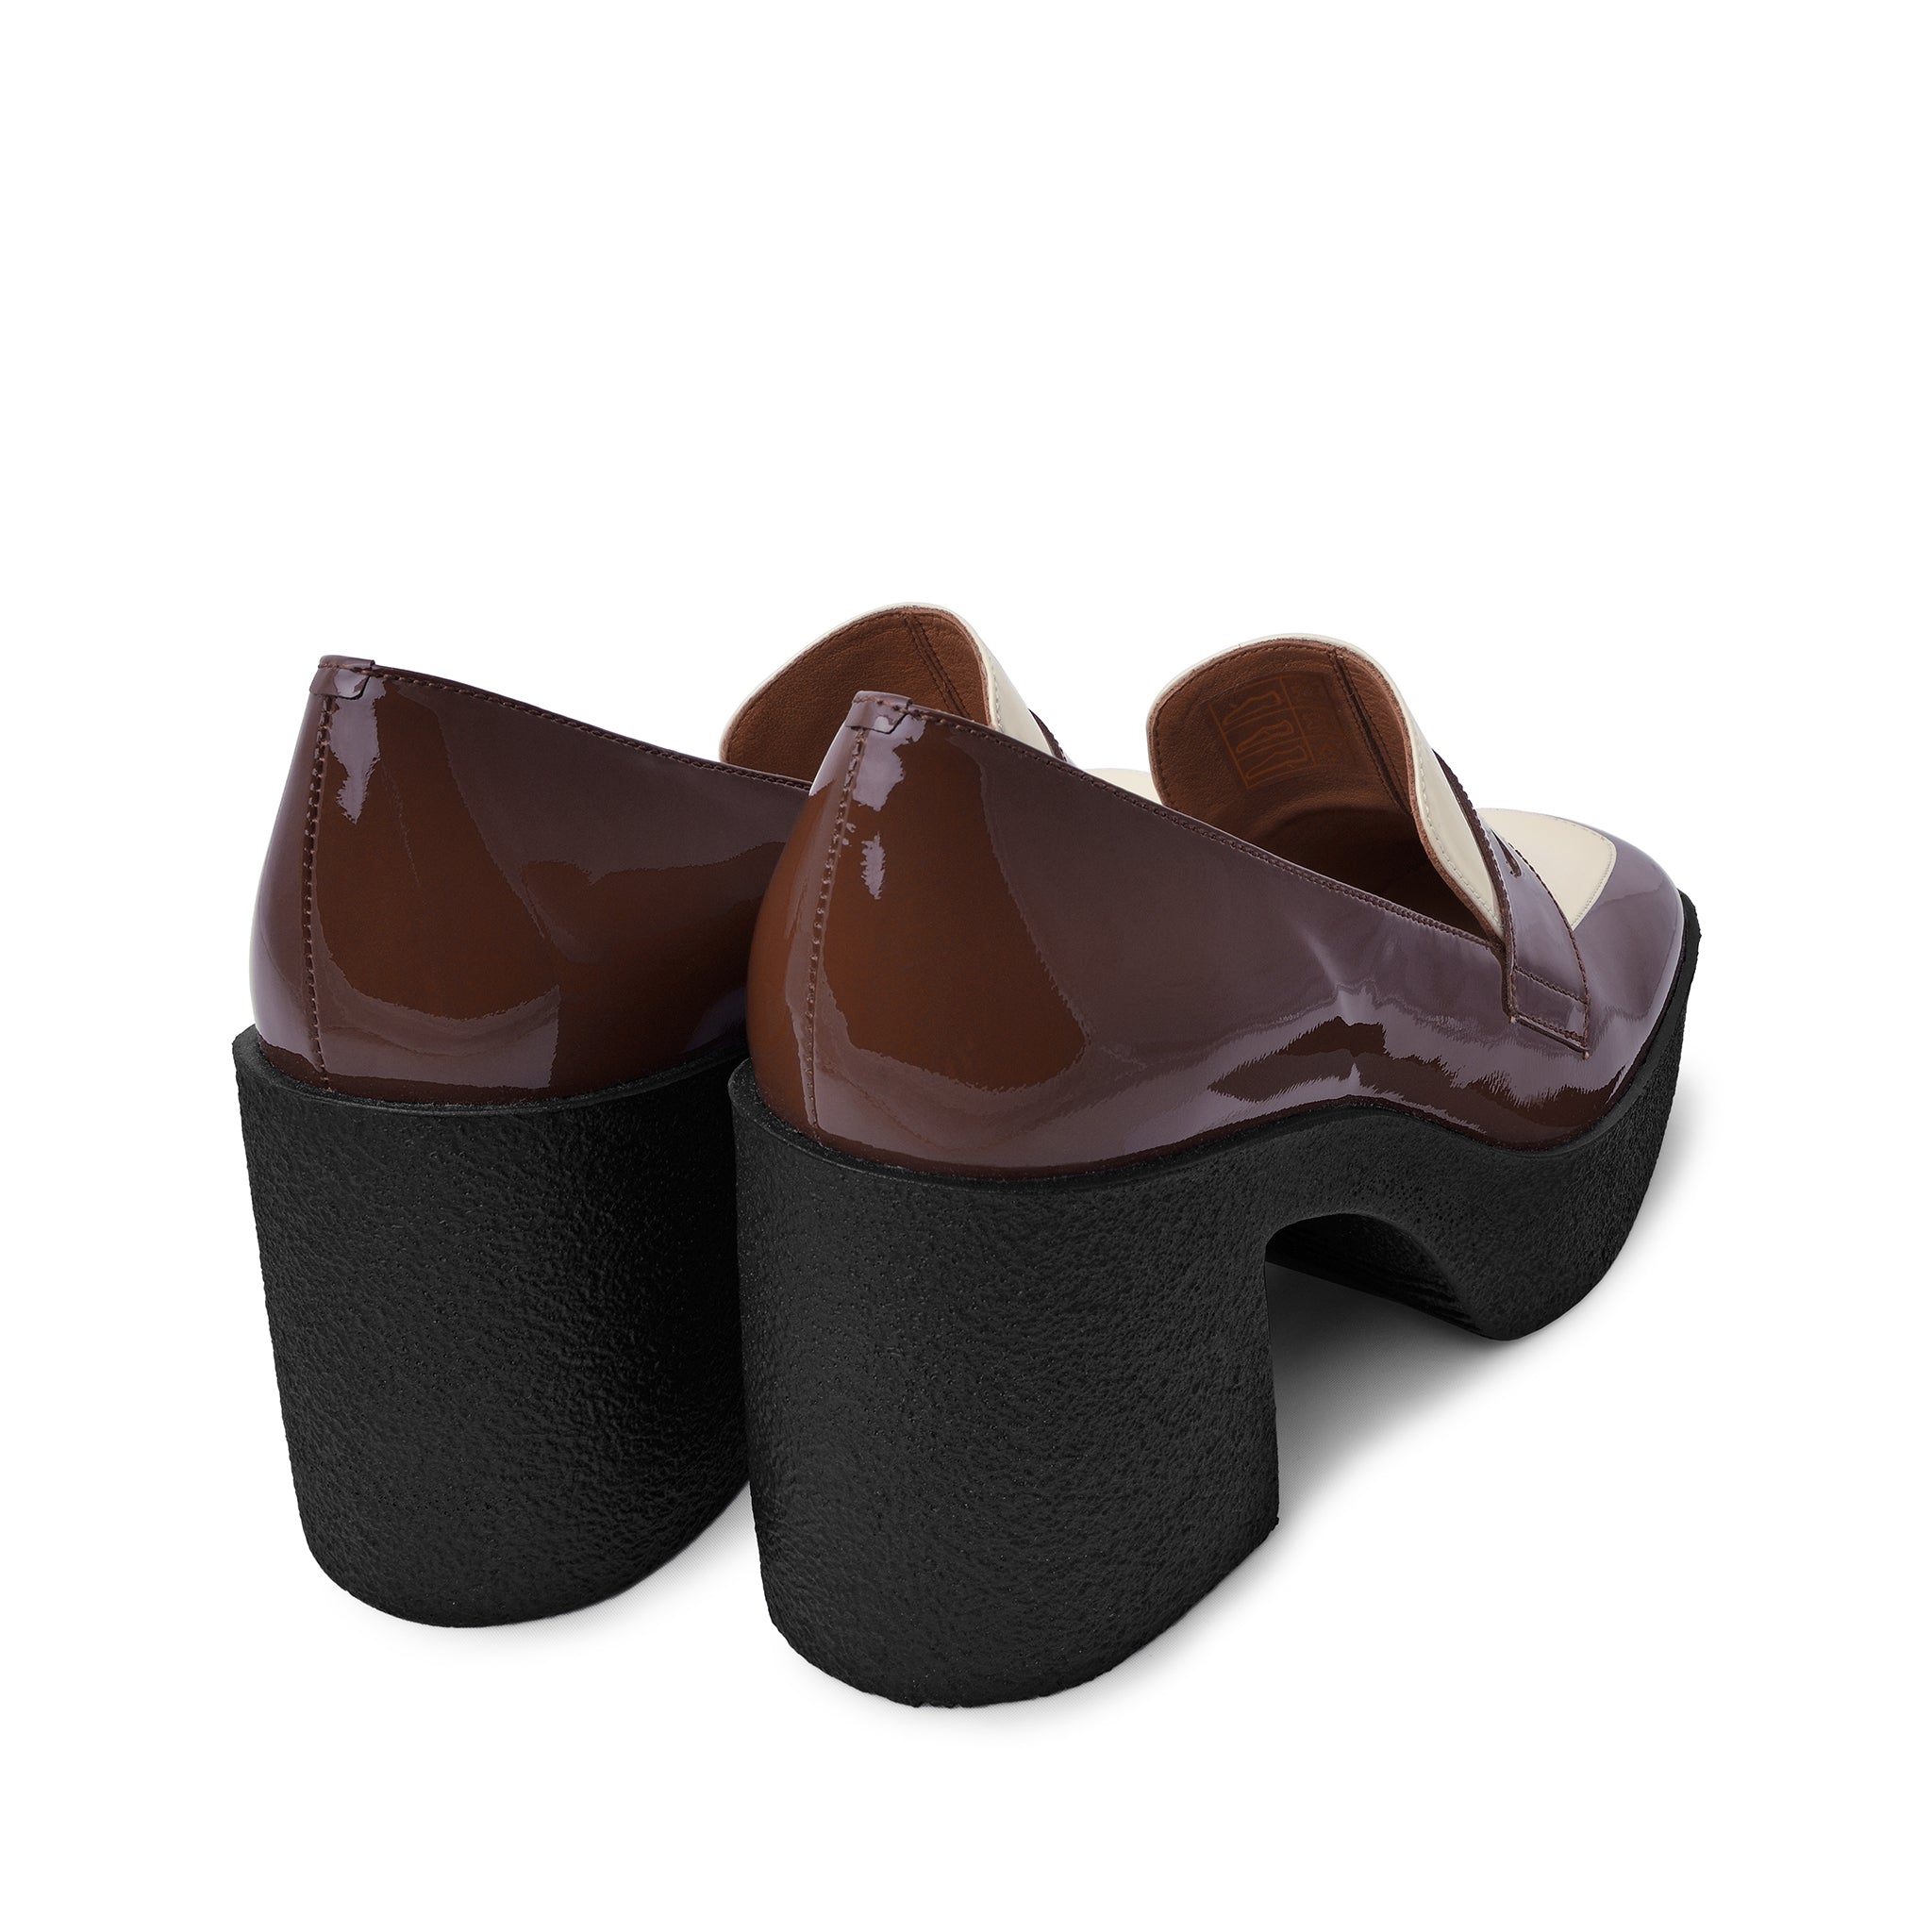 Yoko Caramel Cream Patent Leather Chunky Loafers 21031-01-05 - 8